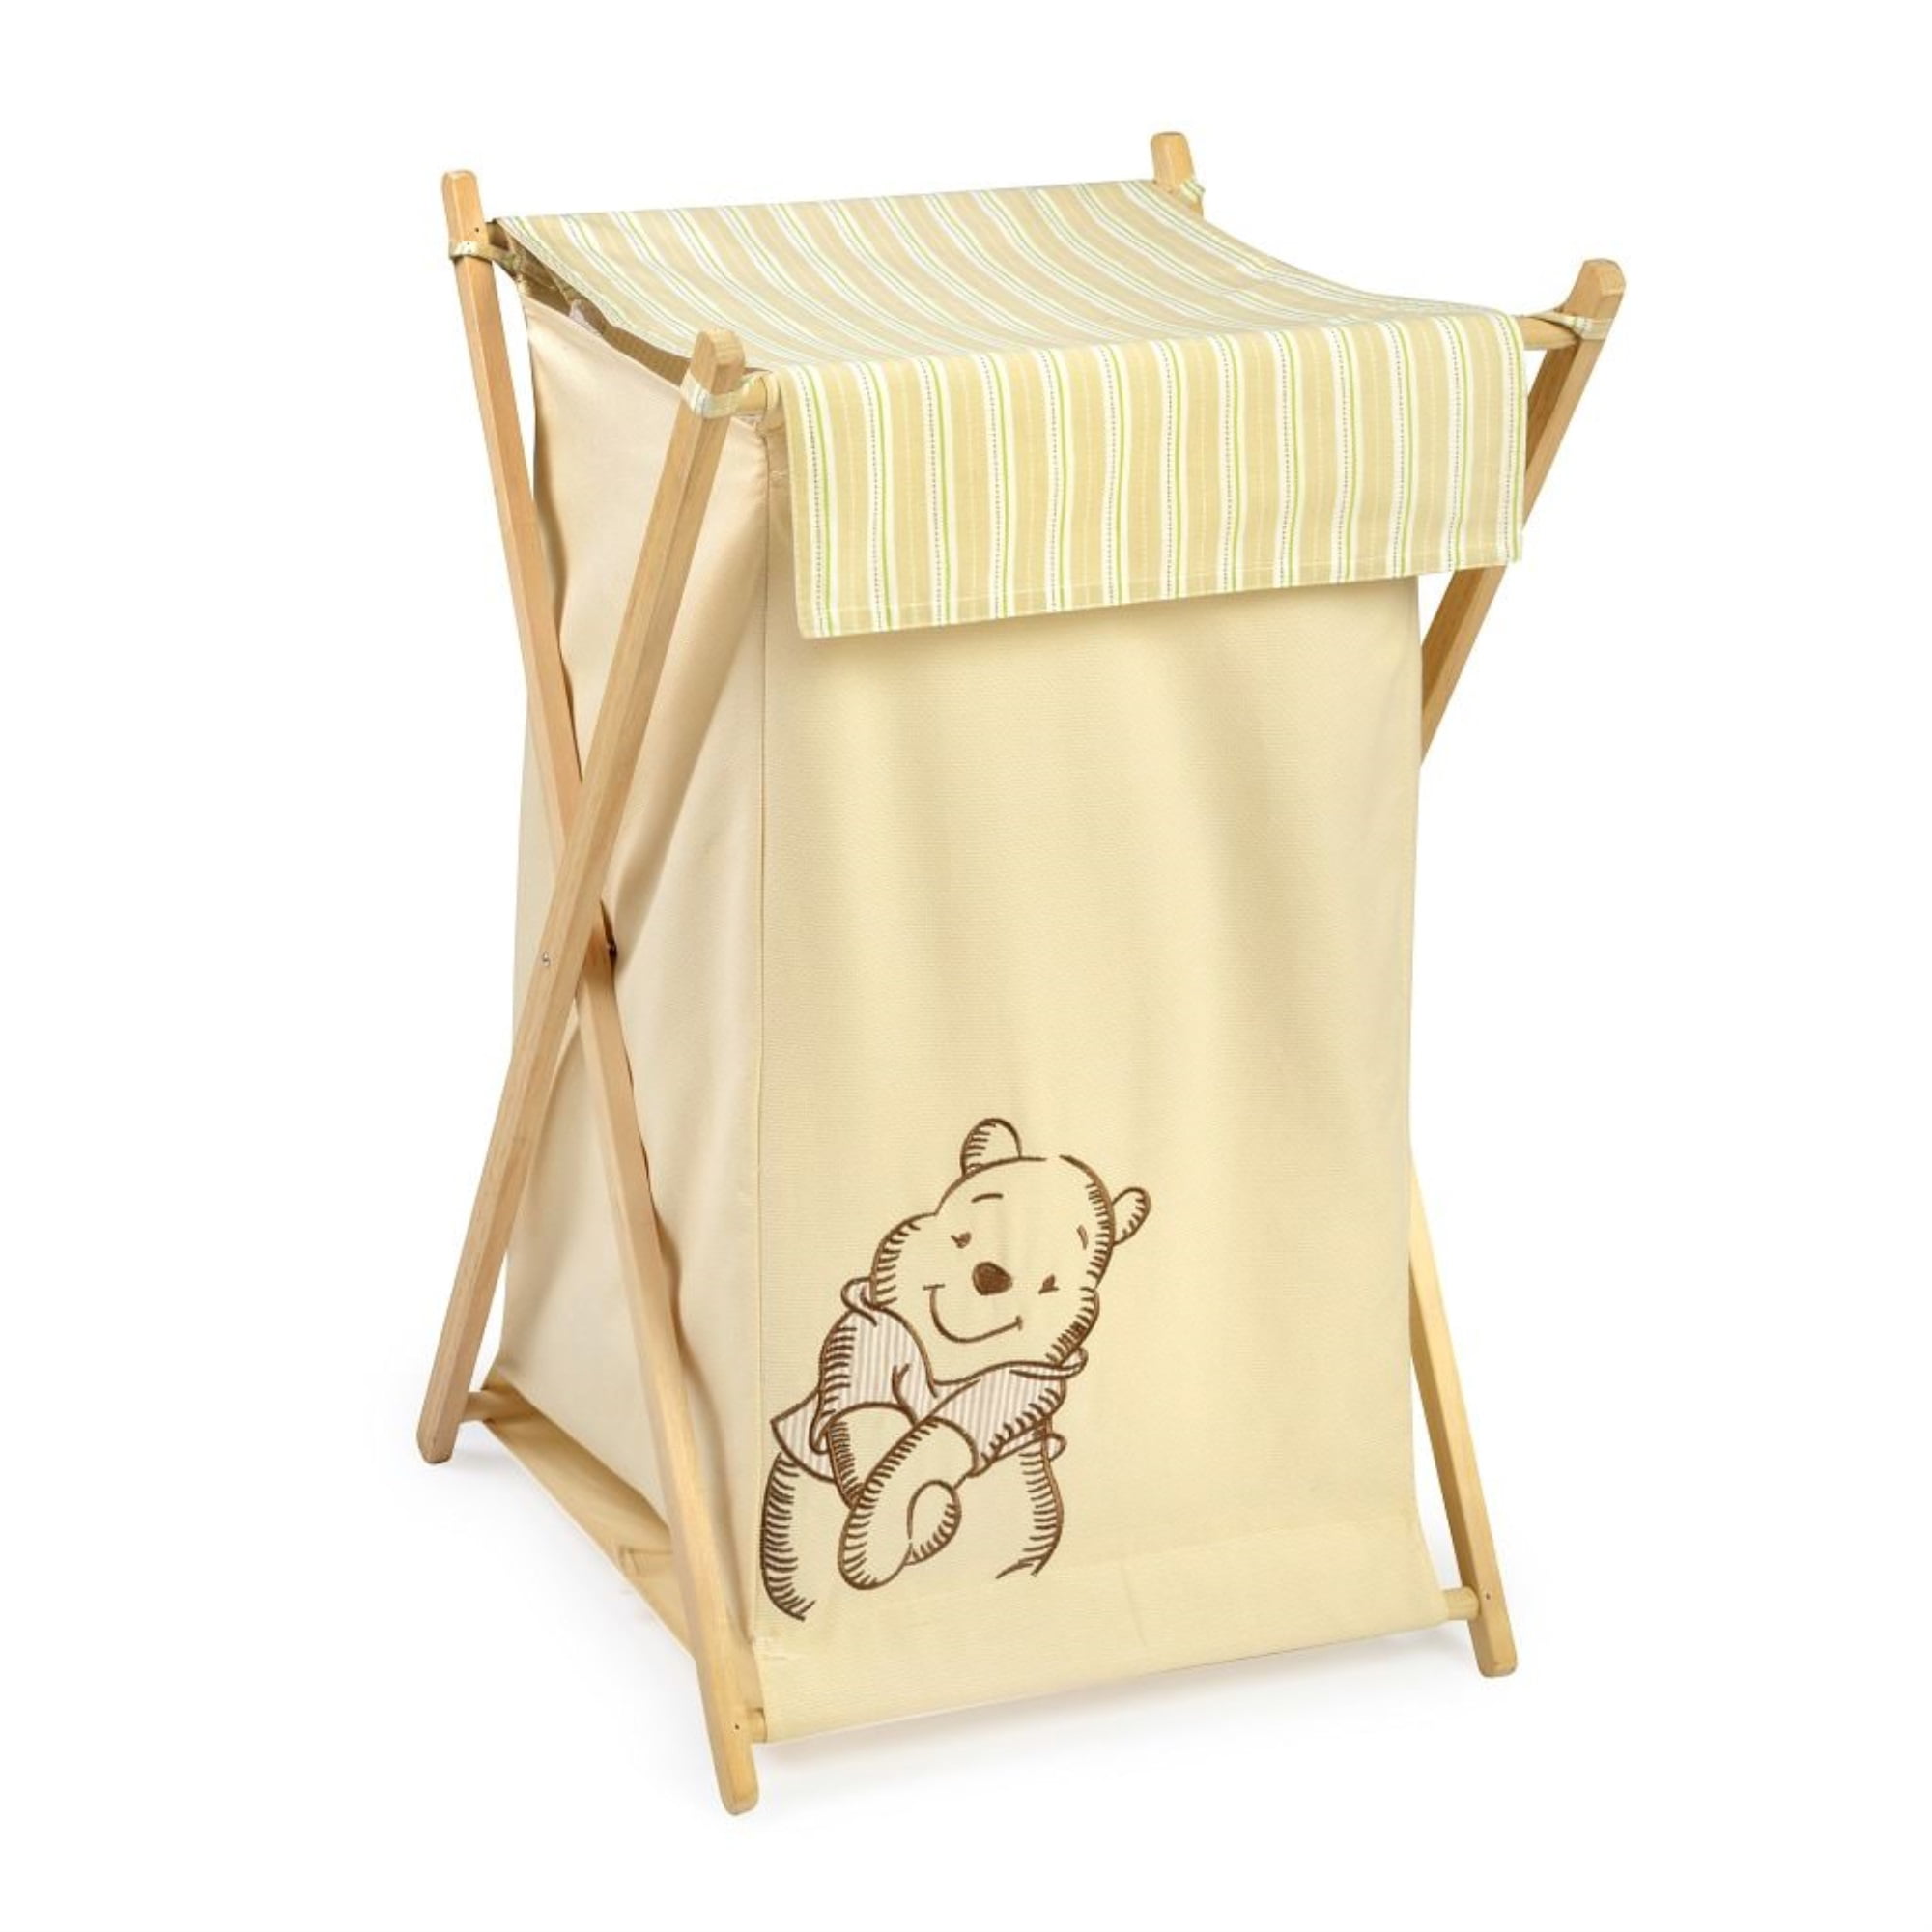 Laundry Basket Baby Winnie The Pooh Laundry Hamper Foldable Clothes Bag Folding Washing Bin